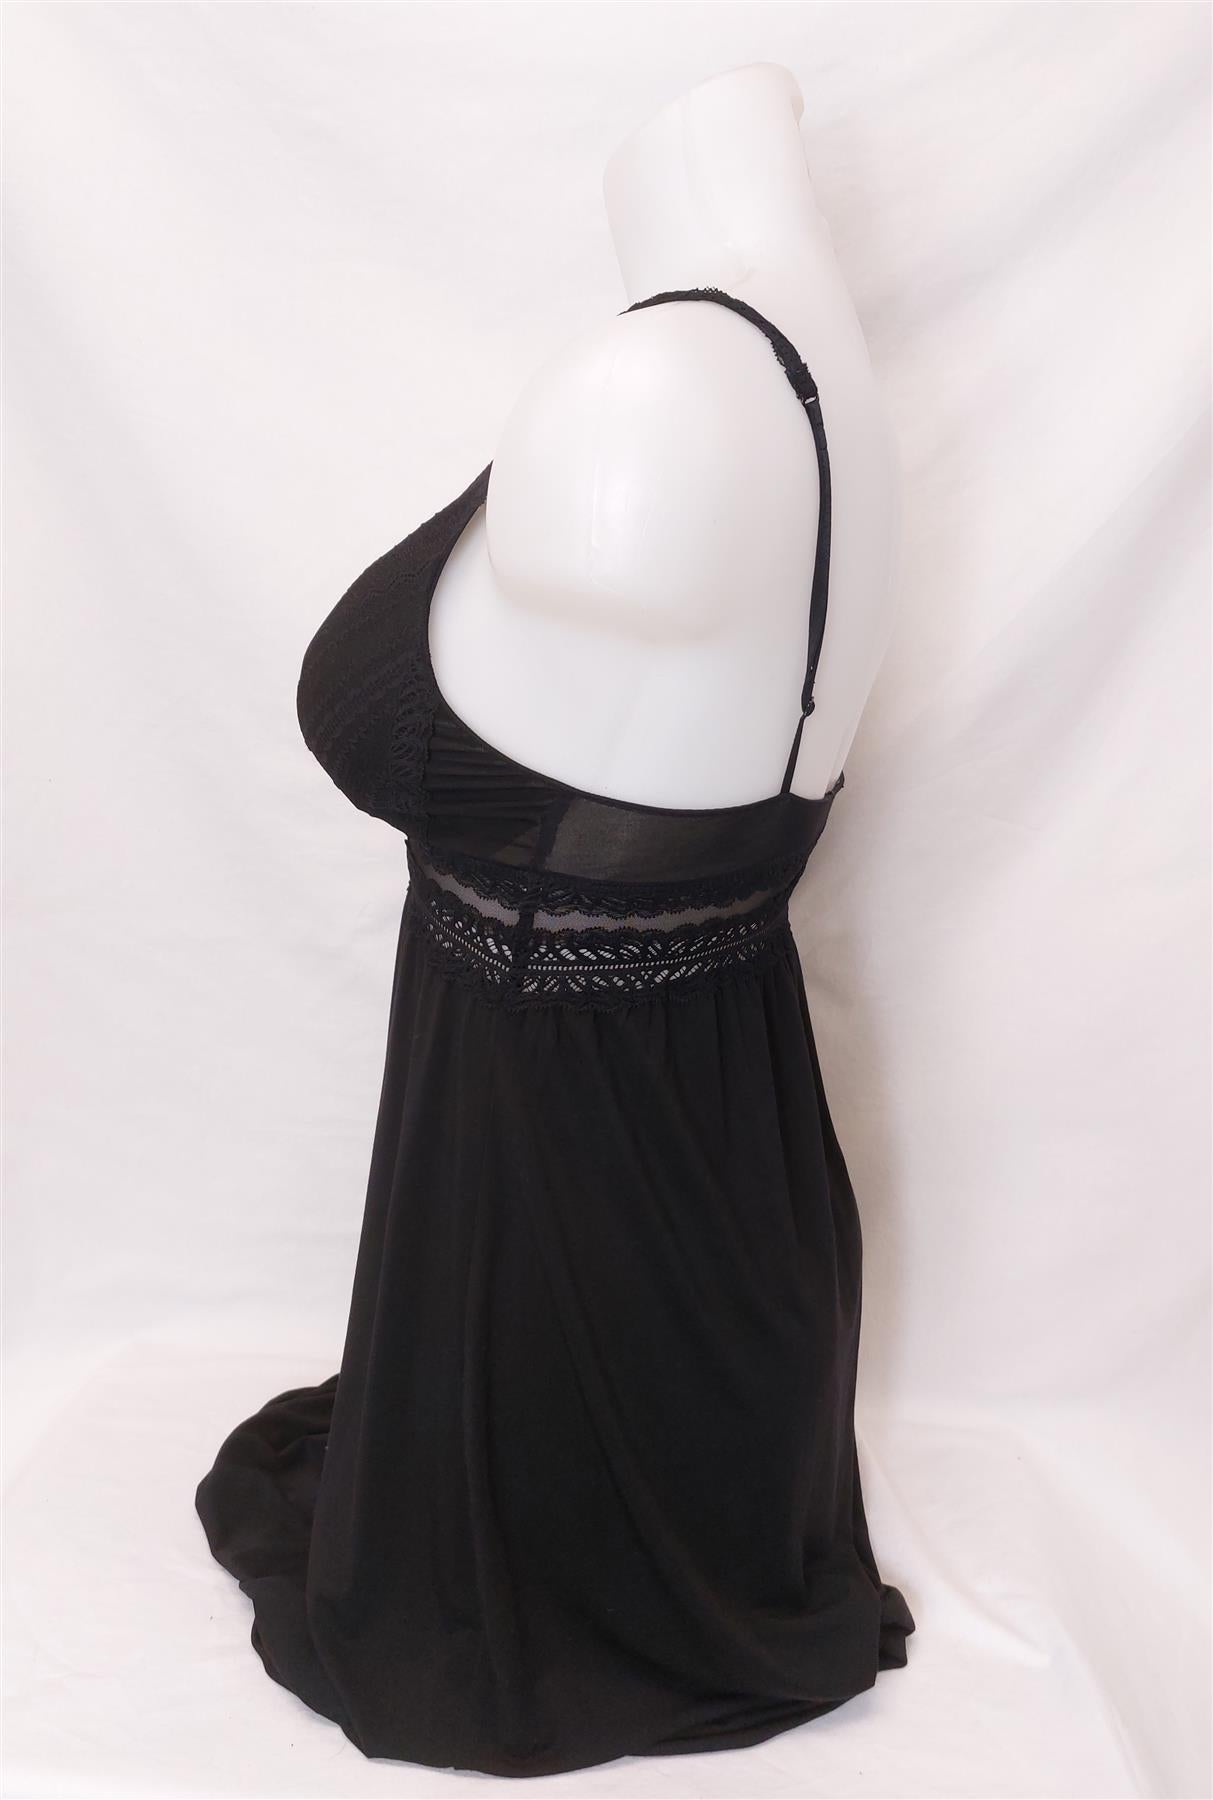 Oysho Women's Lace Nightdress Soft Full Slip Nightie Padded or Unpadded Black